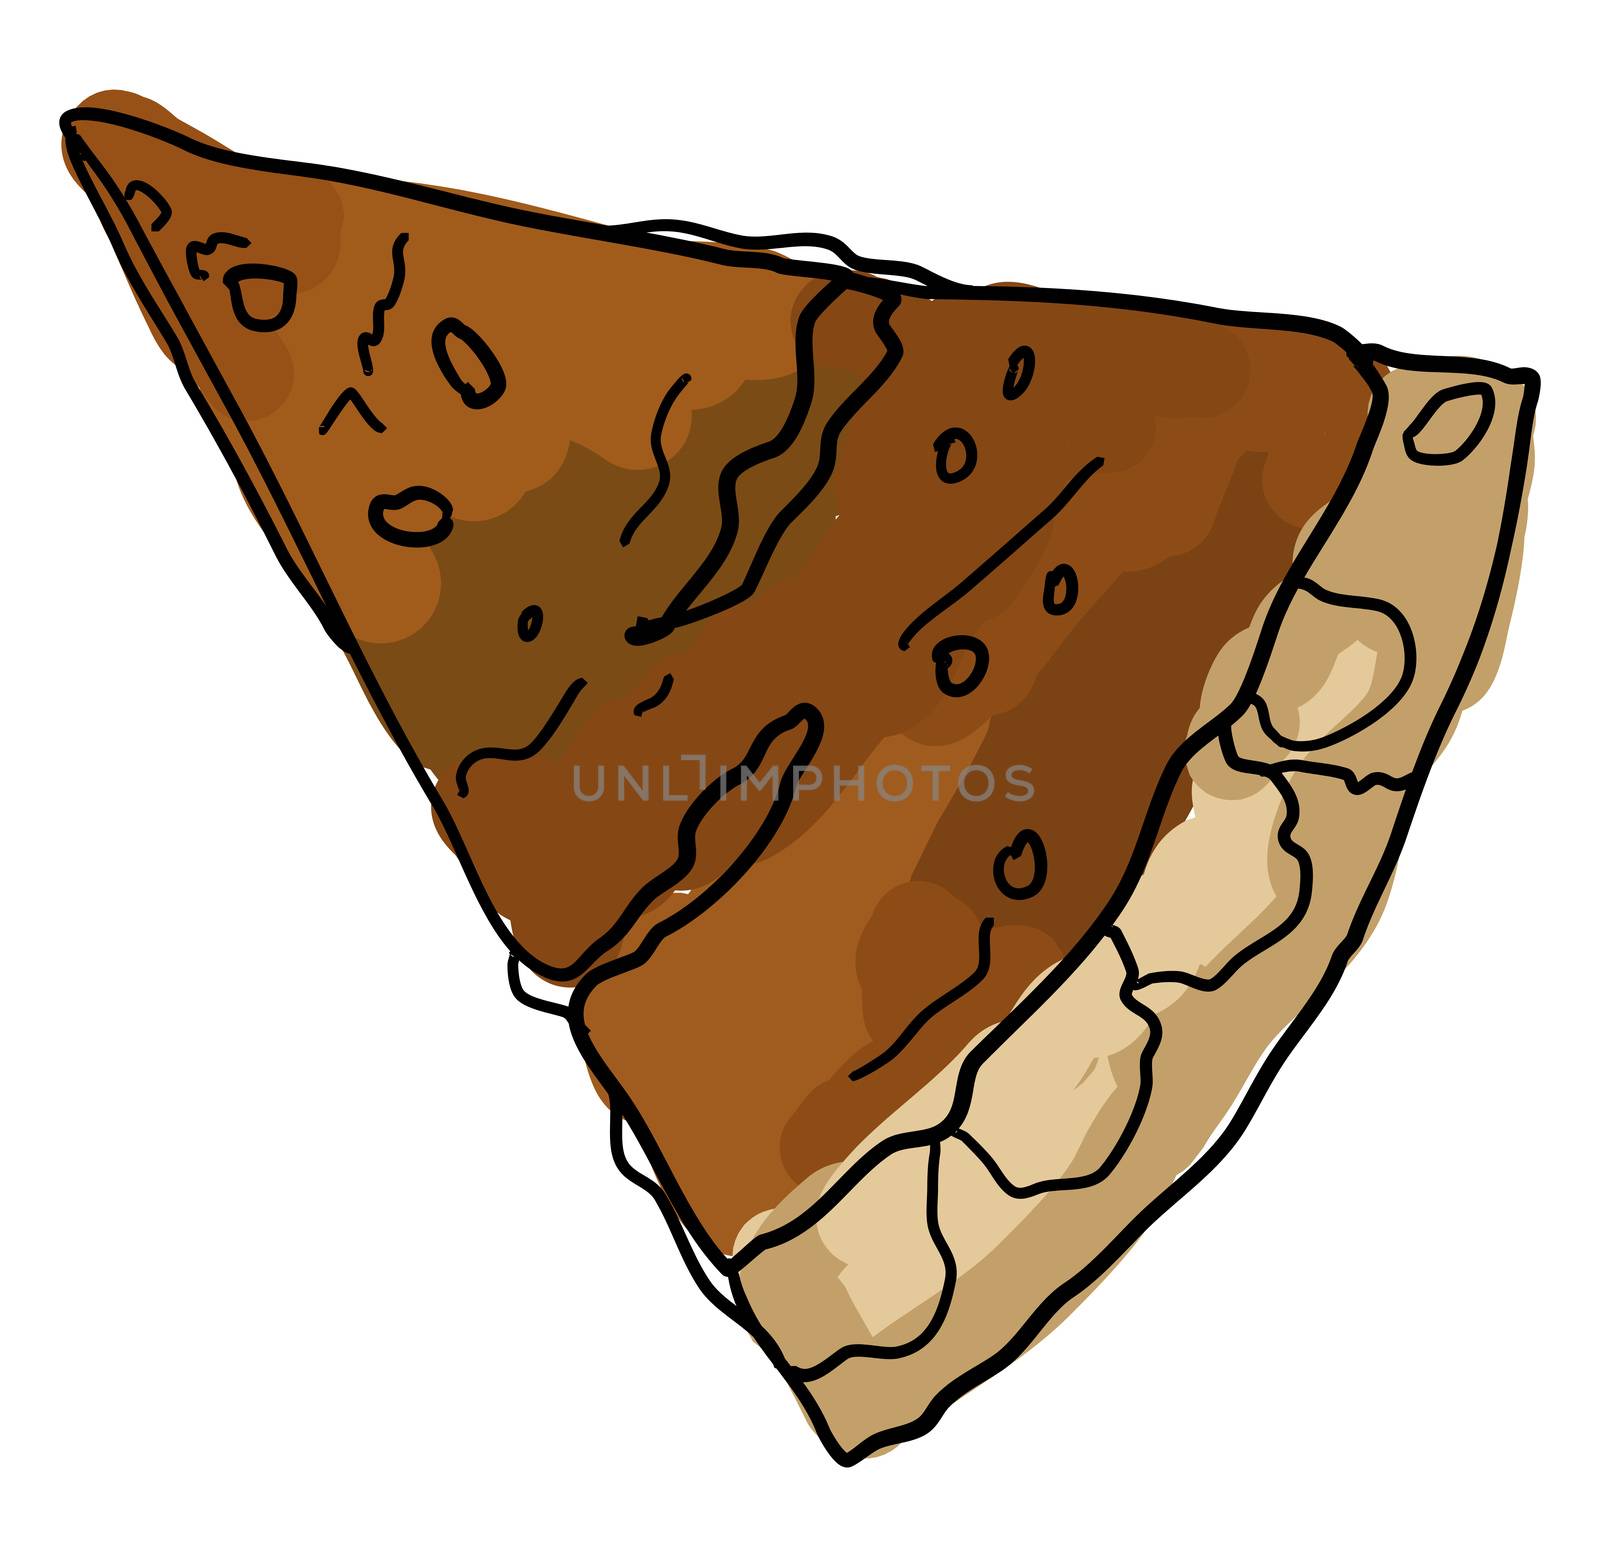 Classic sweet potato pie, illustration, vector on white background